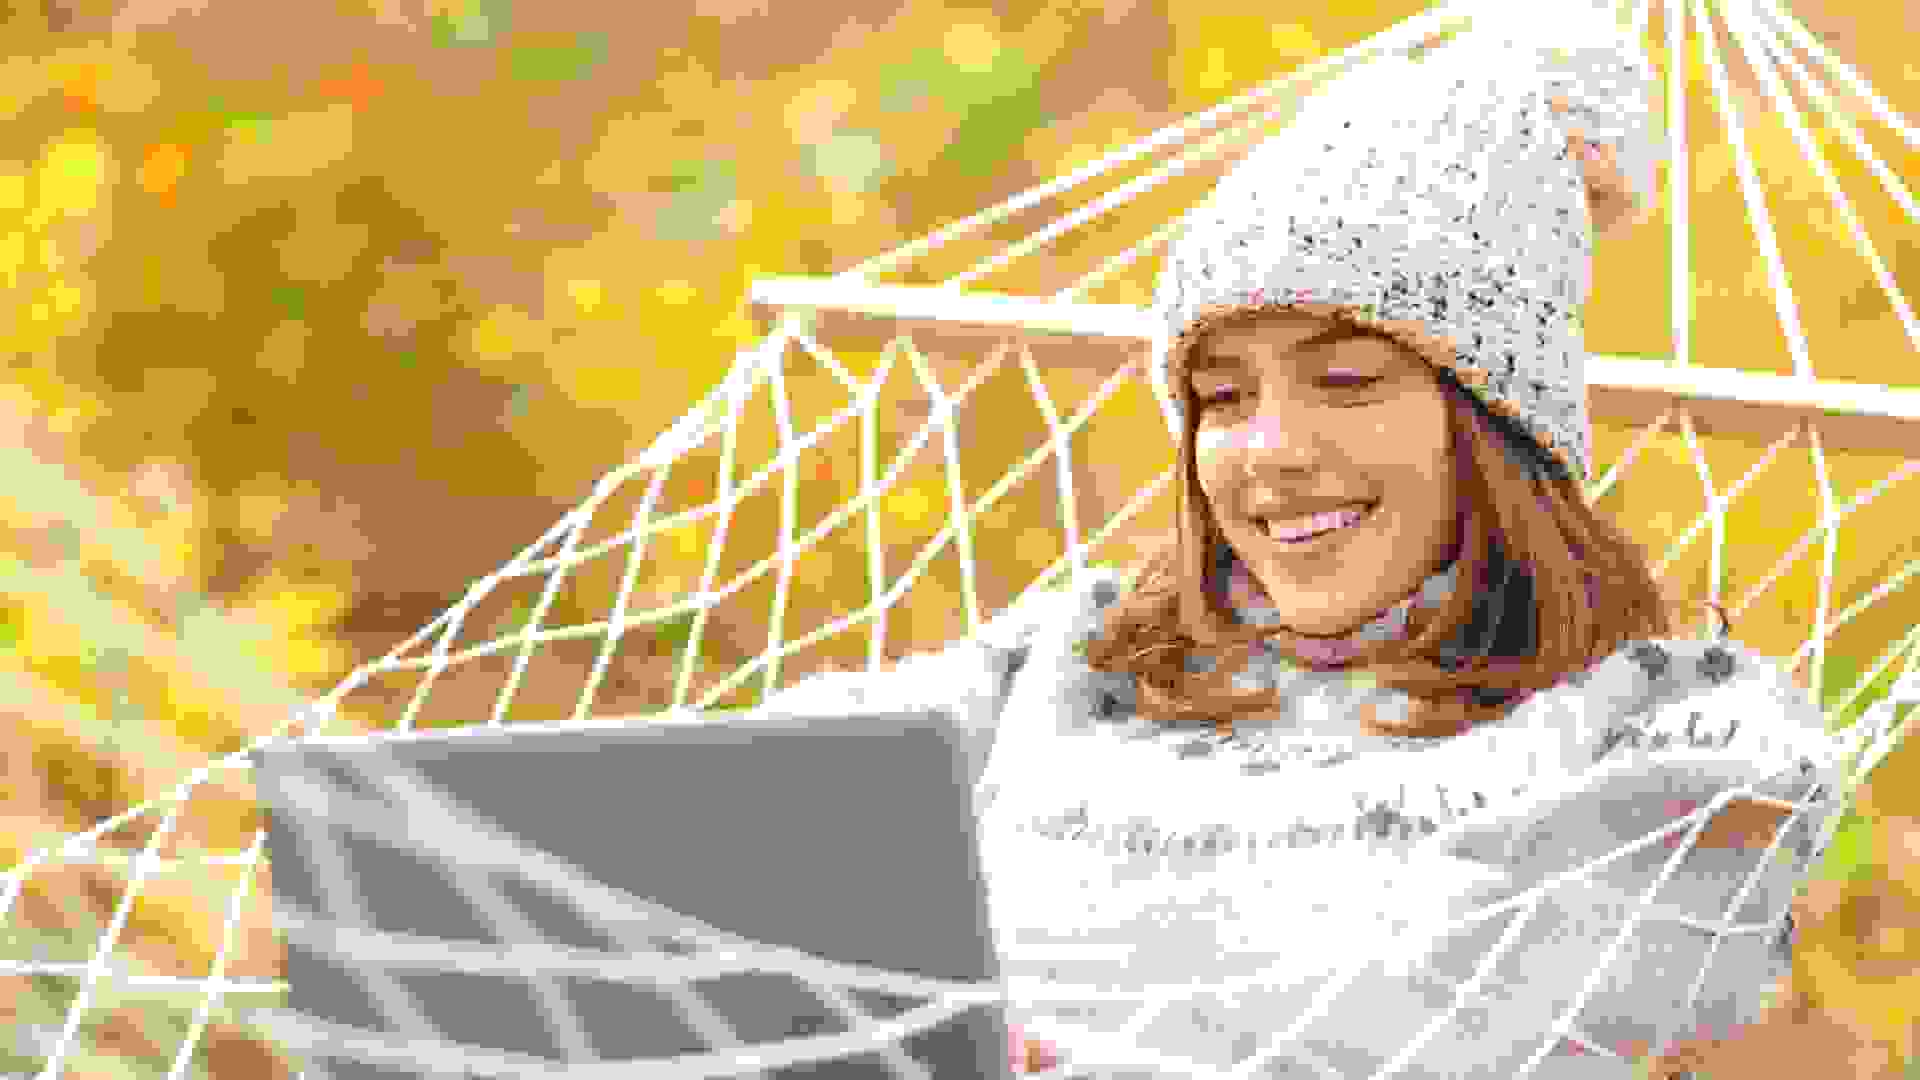 Happy woman on hammock using laptop in autumn.